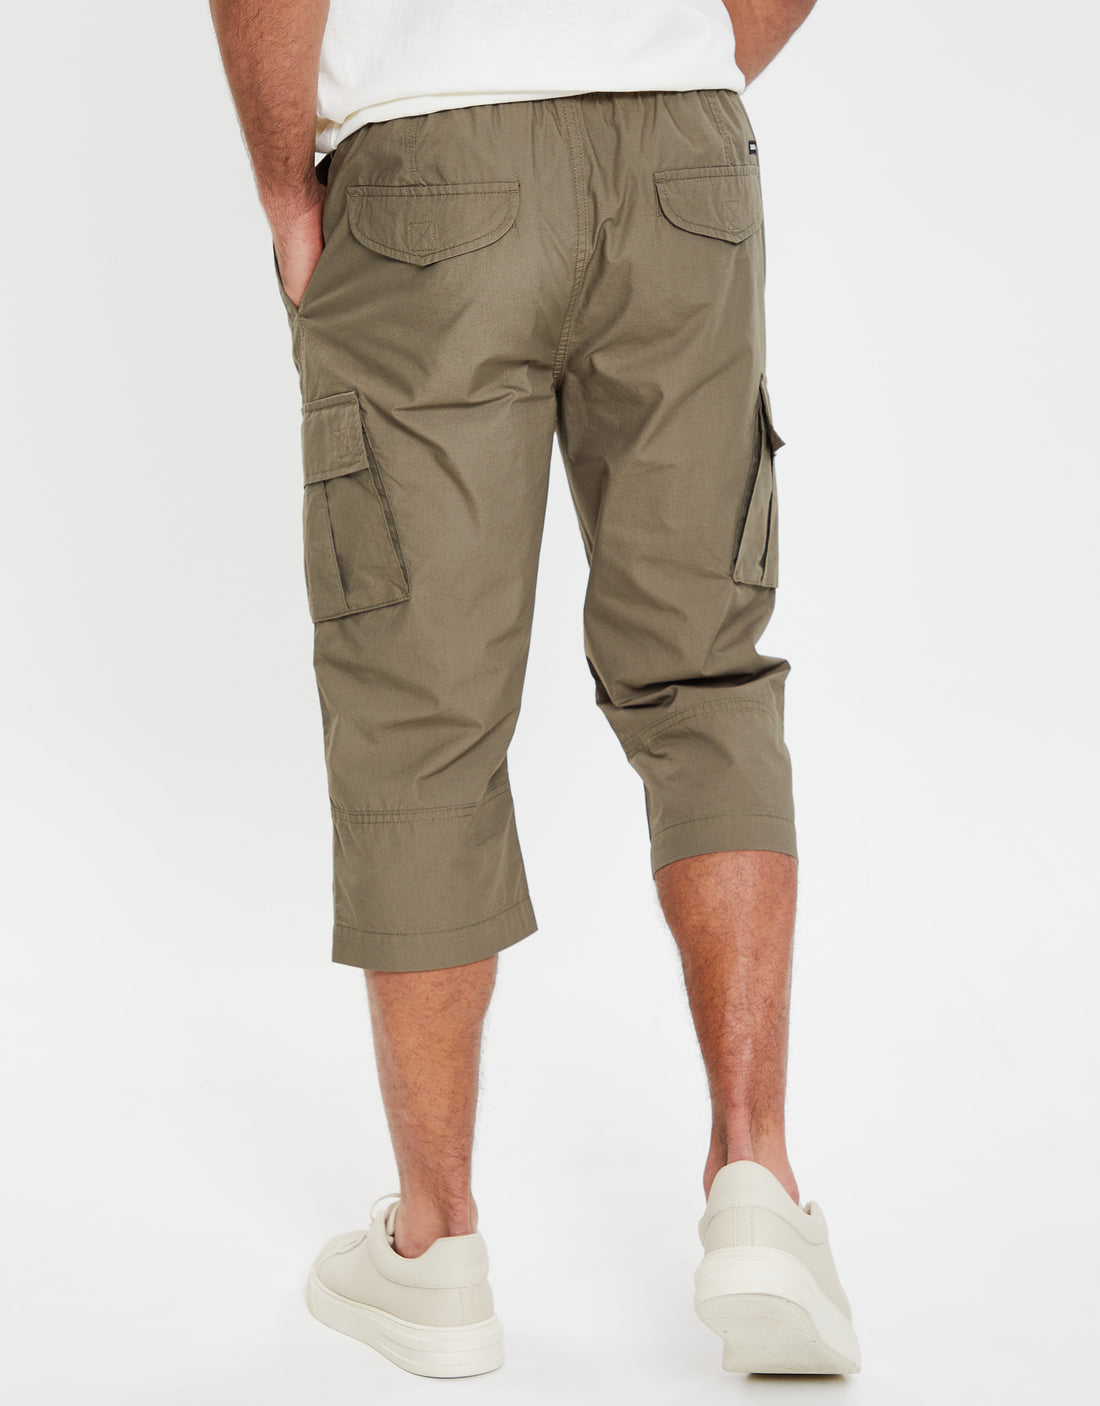 REI Co-op Slickrock 3/4-Length Pants - Men's | REI Co-op